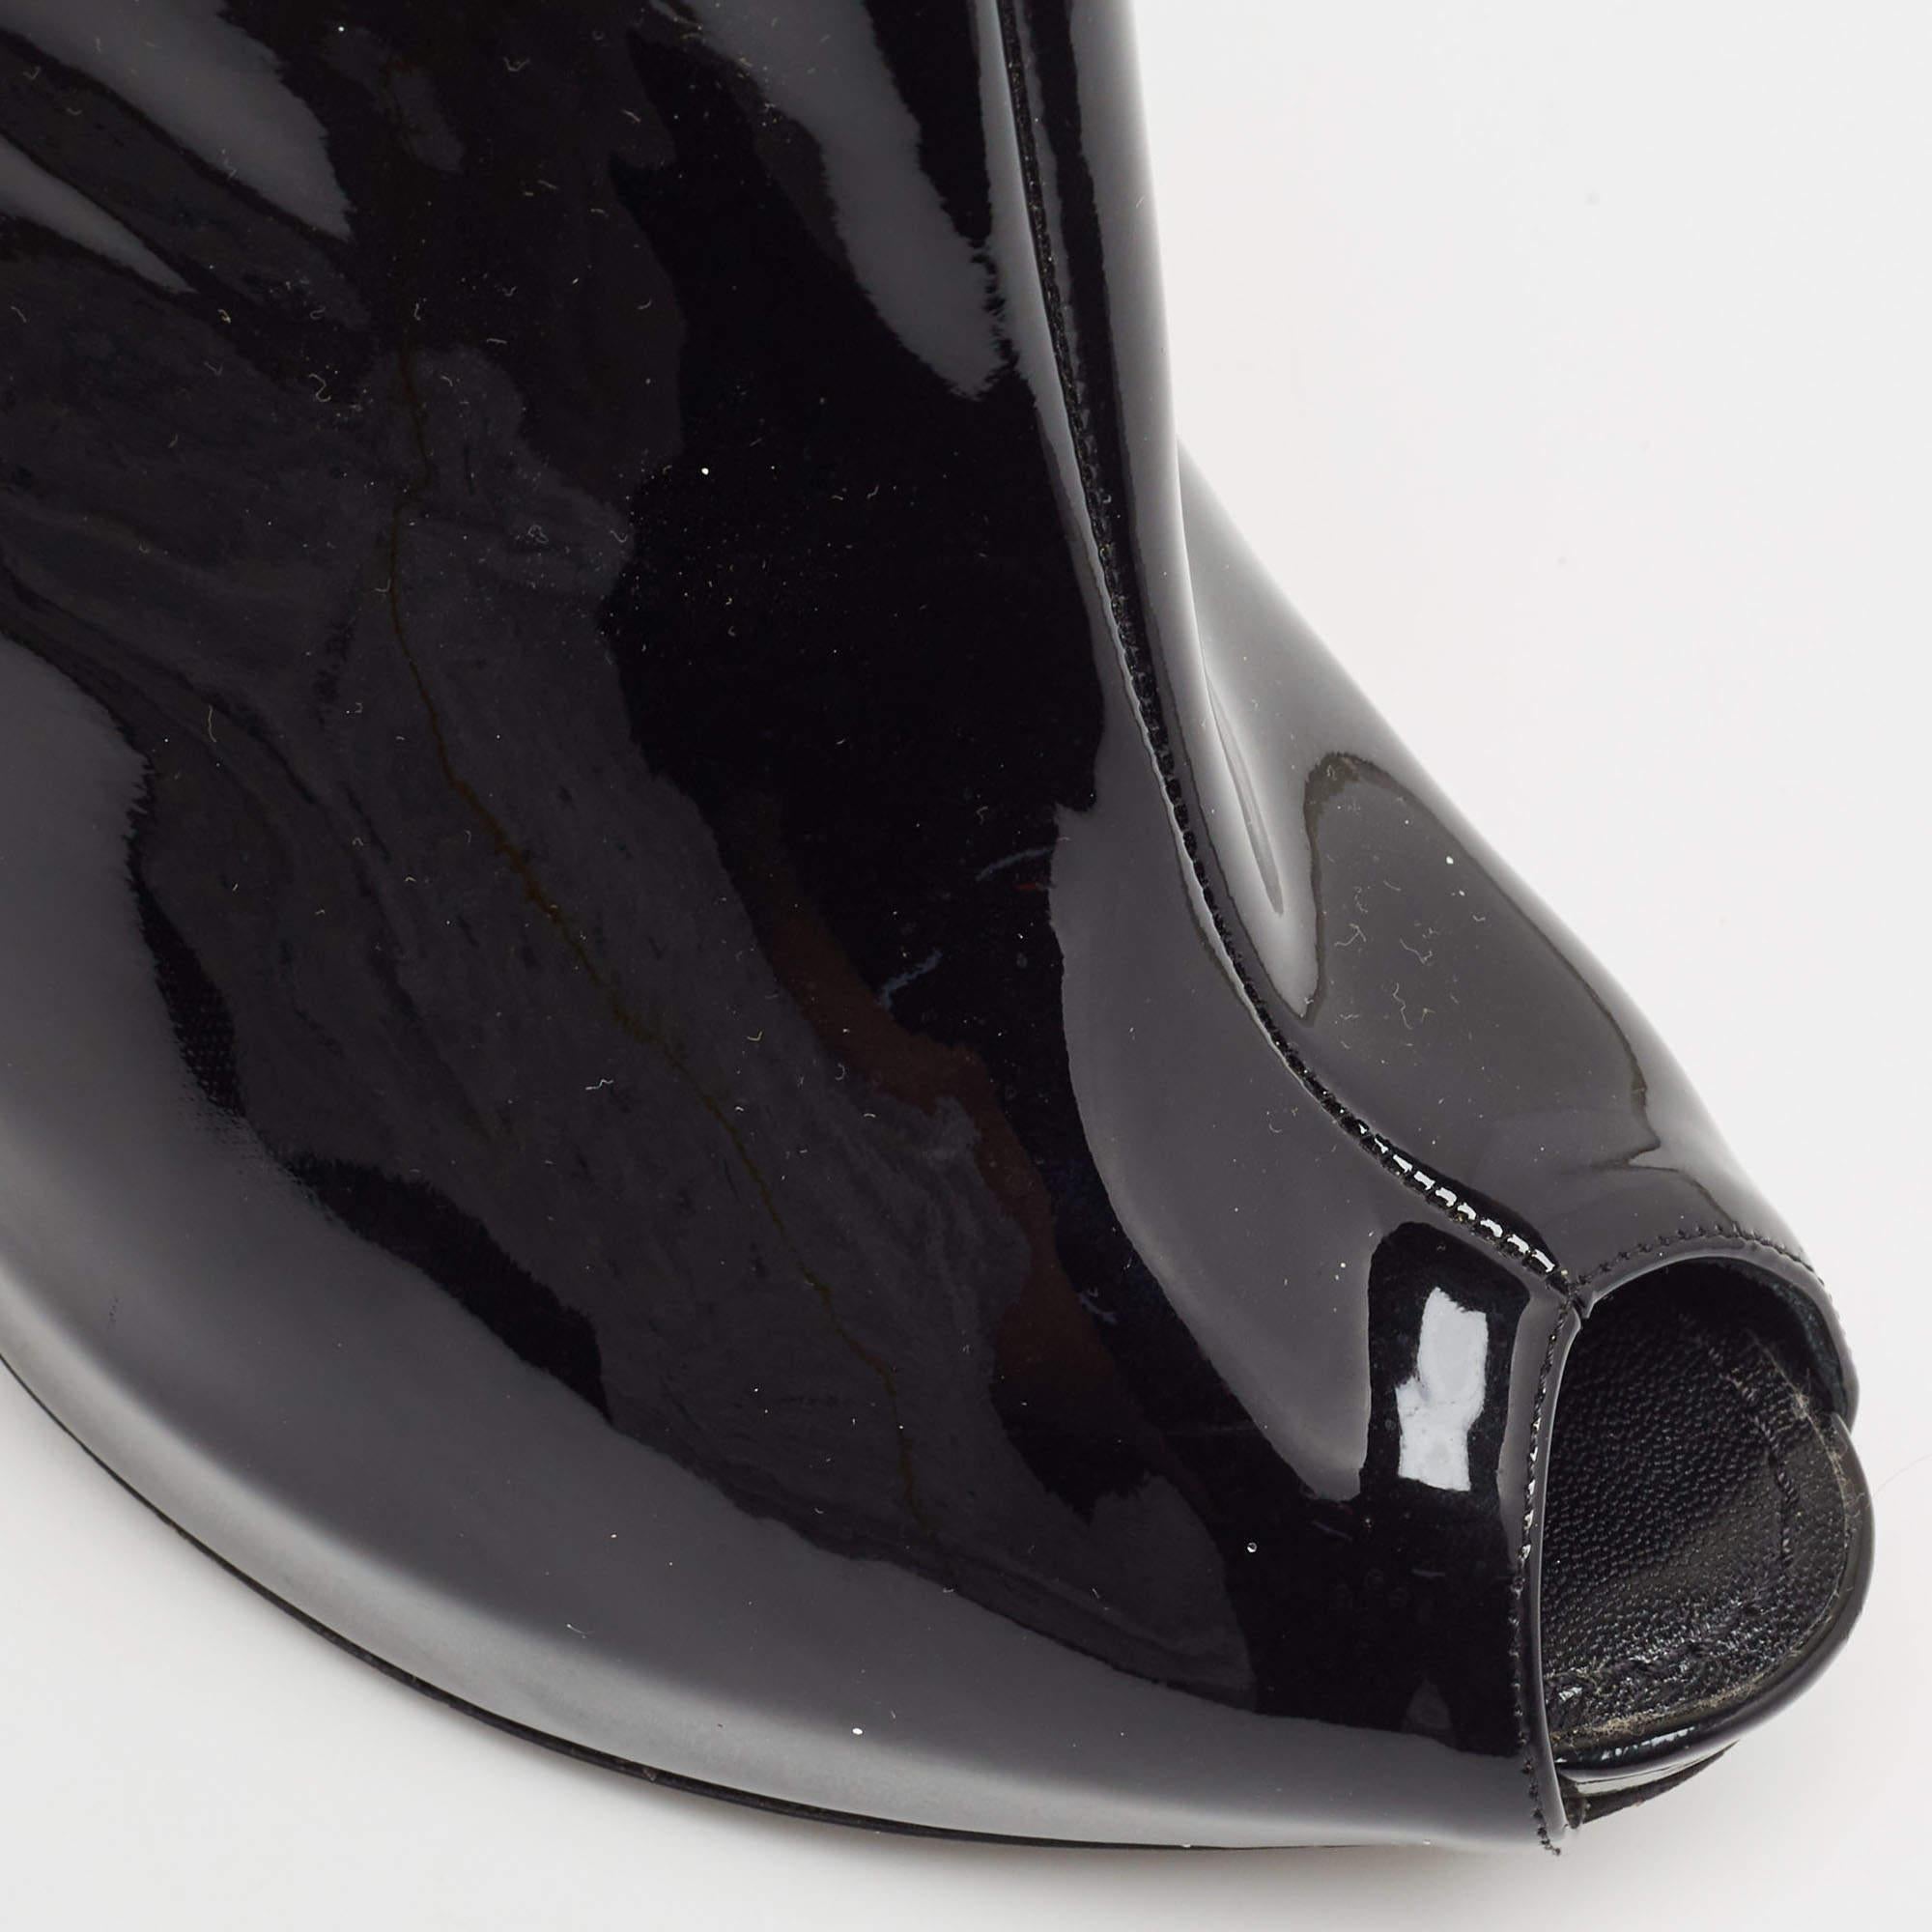 Louis Vuitton Black Patent Leather Peep Toe Ankle Booties Size 38.5 In Good Condition For Sale In Dubai, Al Qouz 2